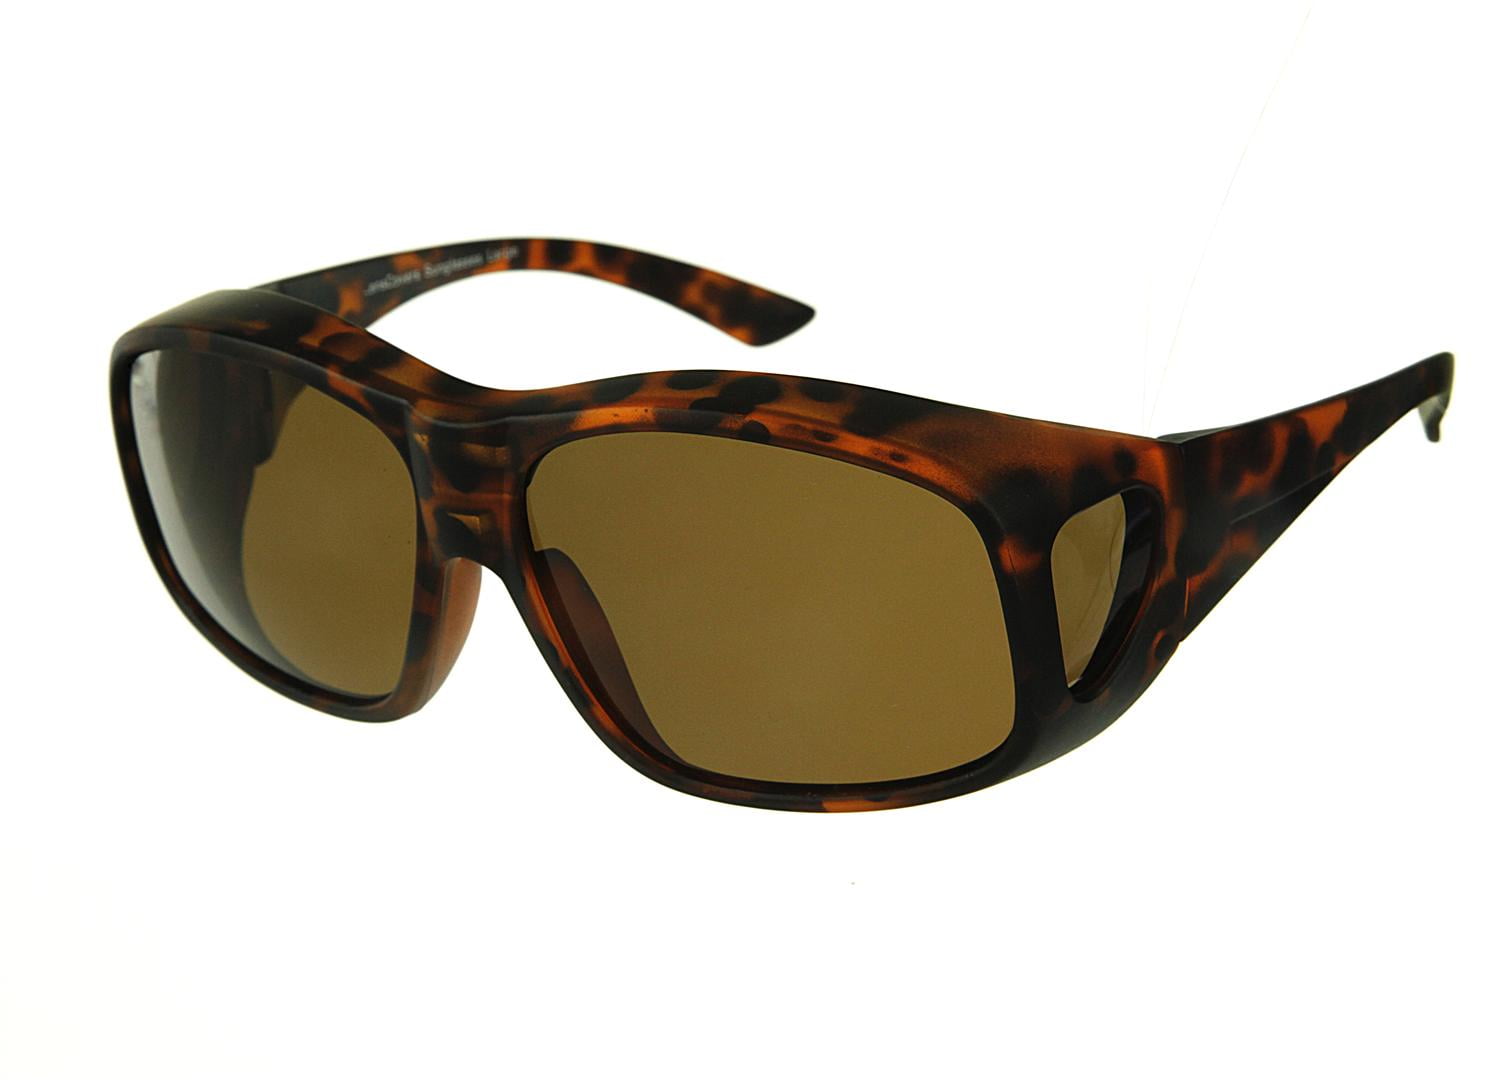 Accessoires Zonnebrillen & Eyewear Zonnebrillen Women's Wrap Around Sunglasses 